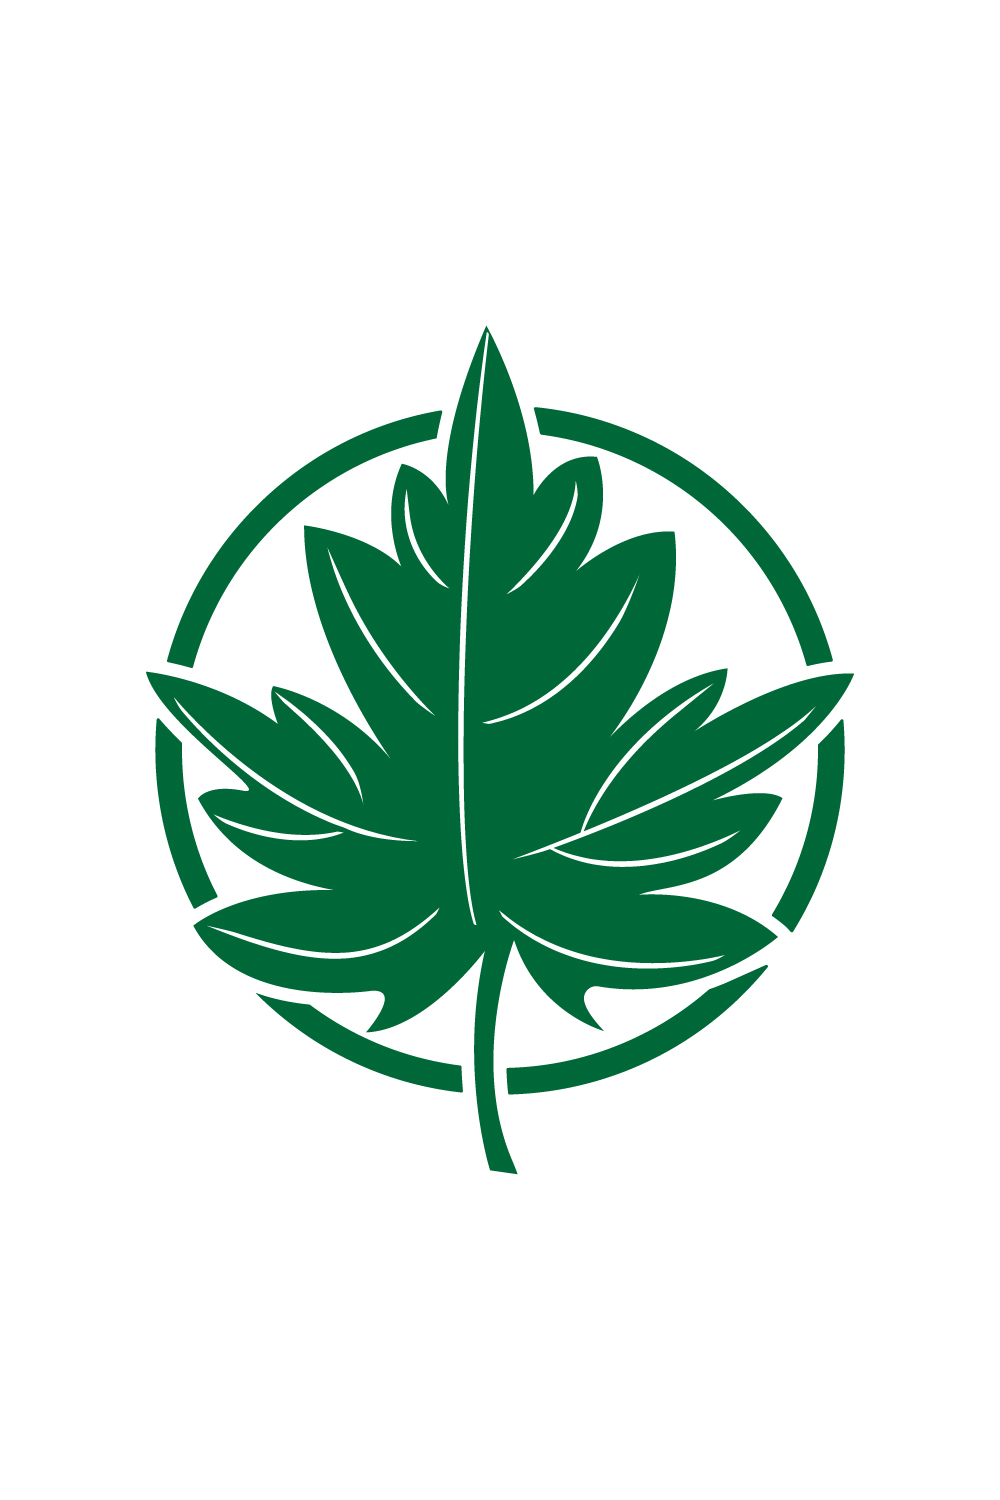 Green Leaf logo design vector images Green Vegetable logo design template icon Green Leaf circle logo best monogram identity pinterest preview image.